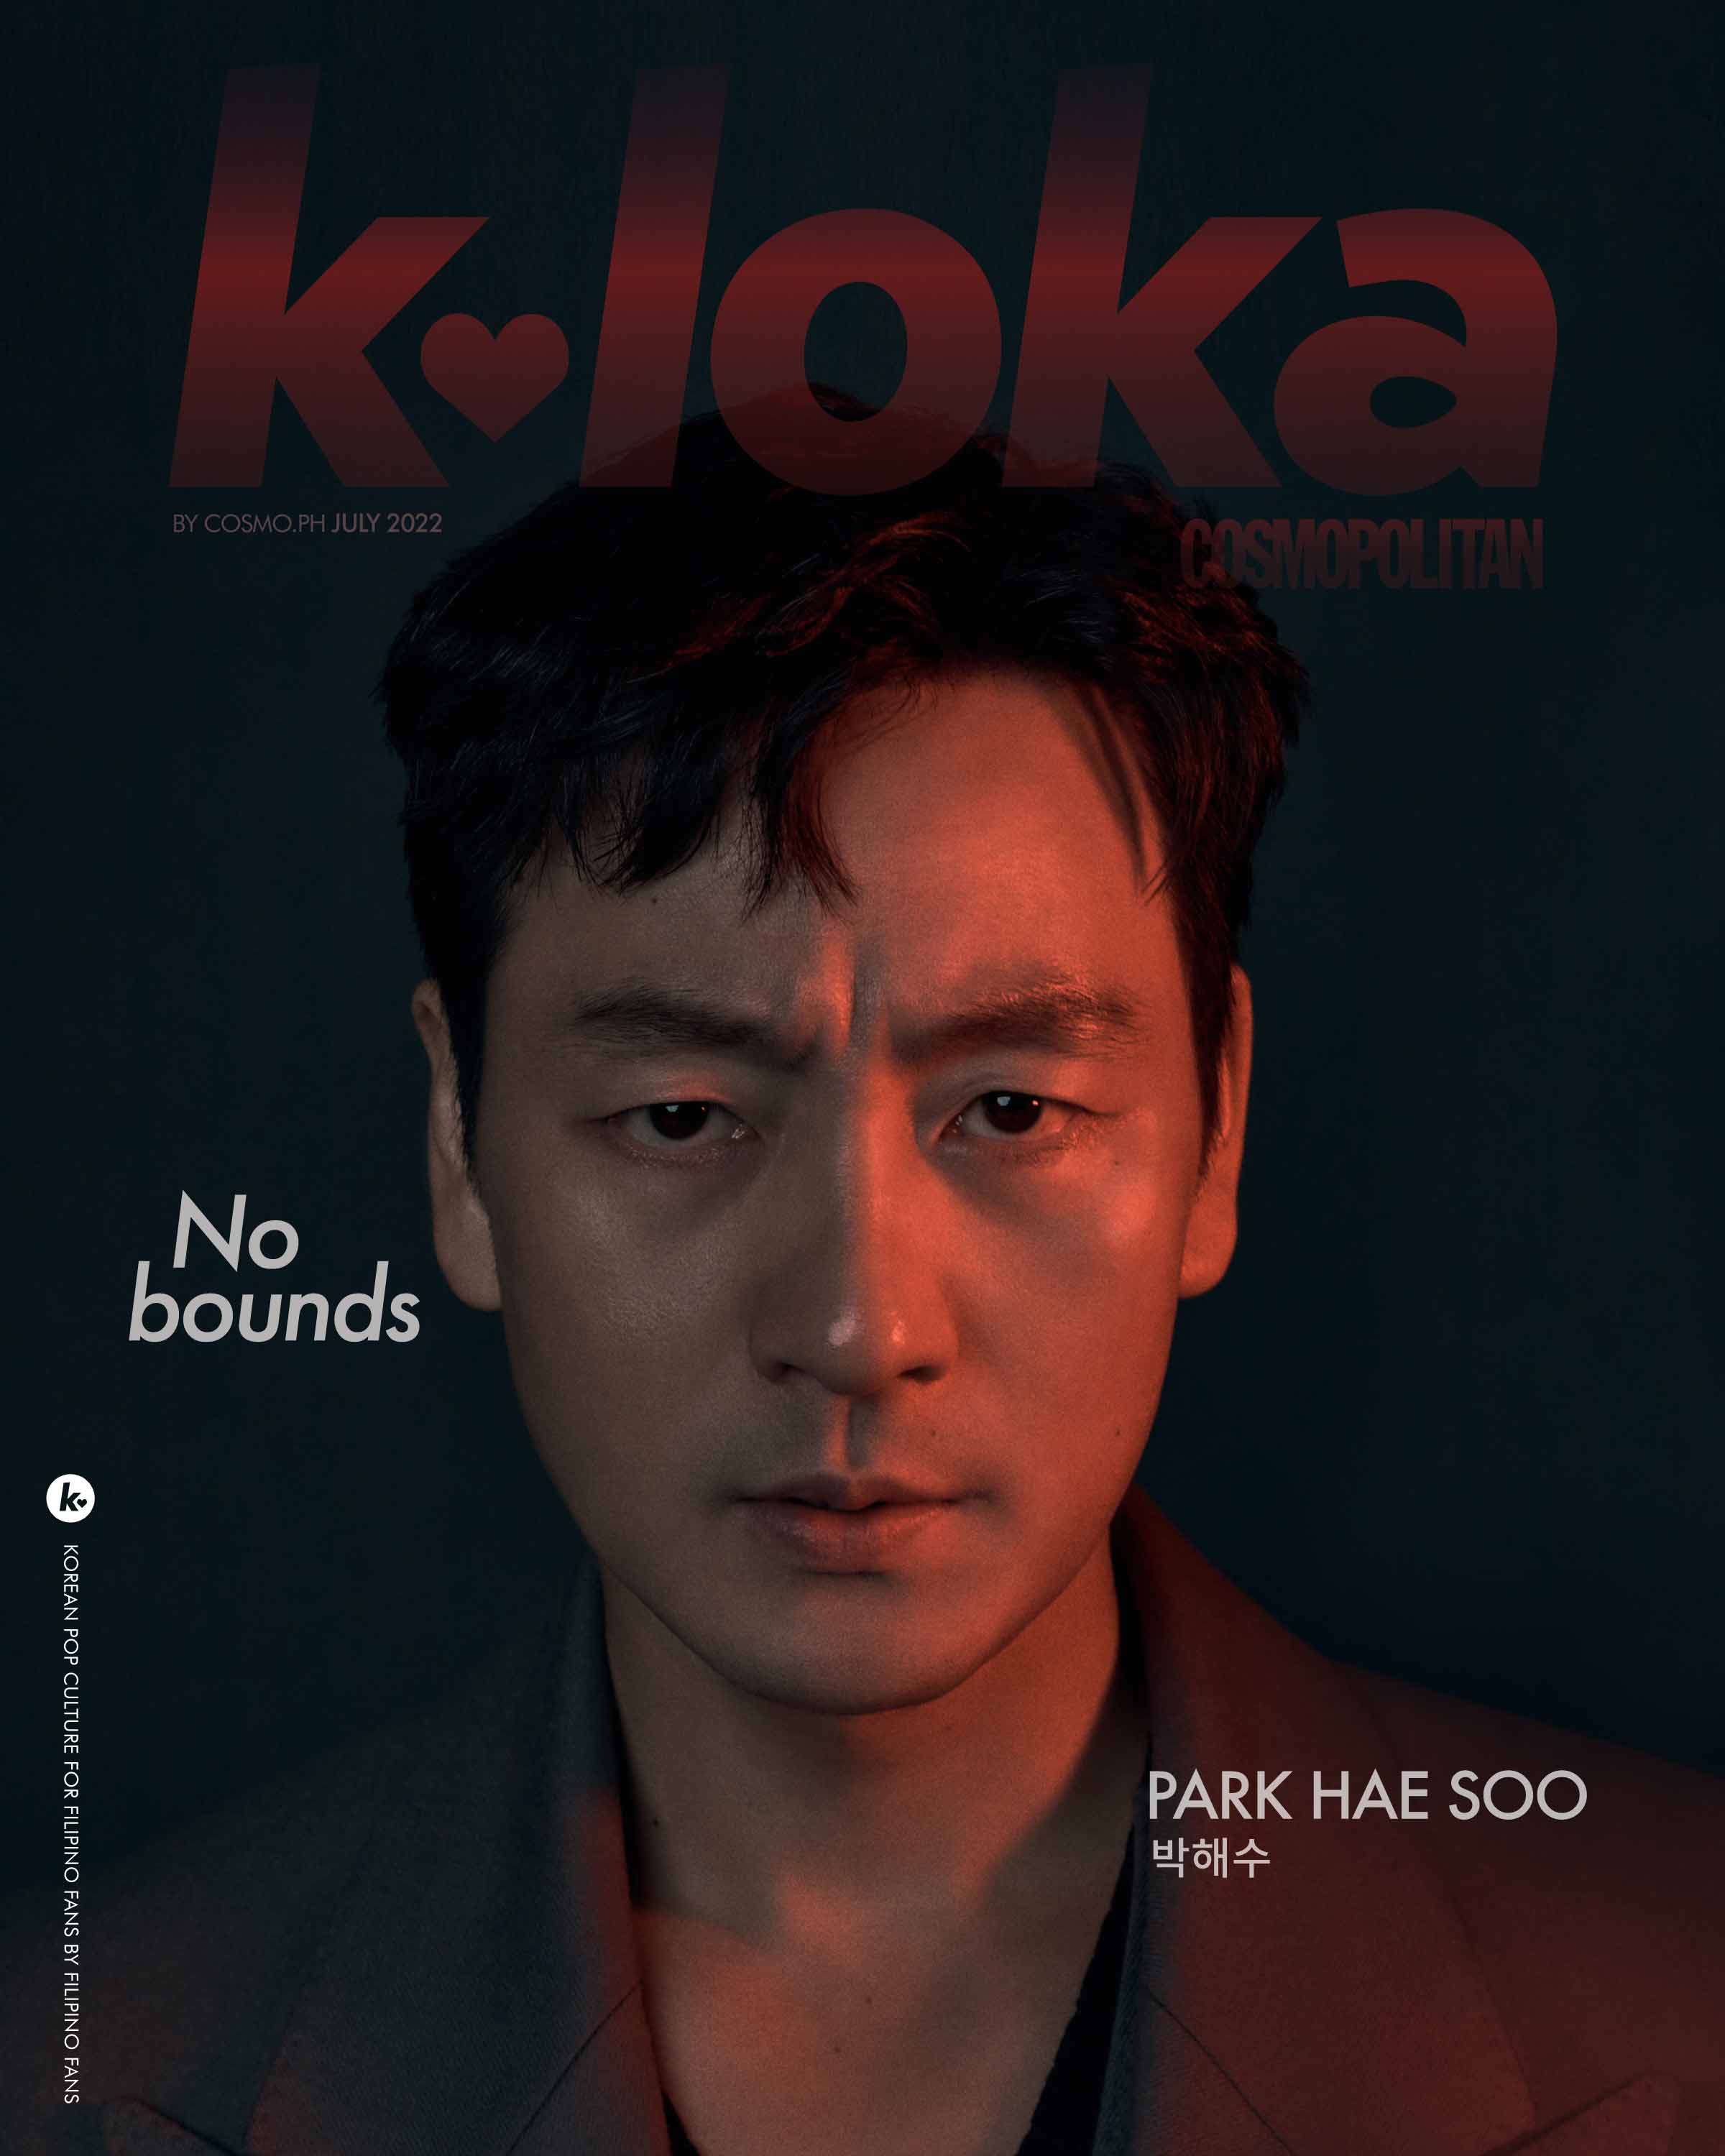 Park Hae Soo for K-loka by Cosmopolitan Philippines